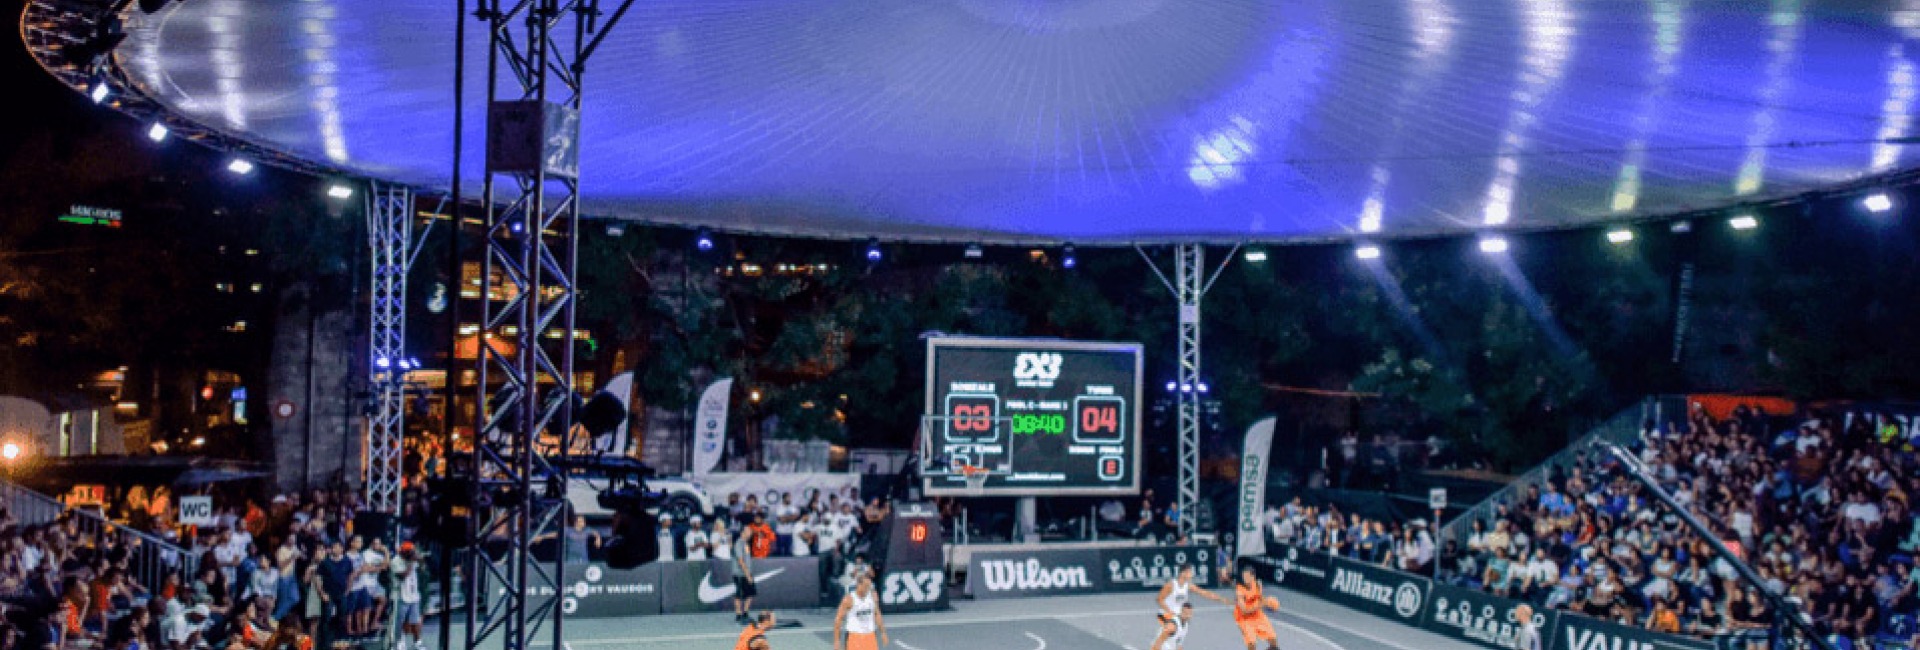 The Bridge 2017 to Host the 4th FIBA 3x3 World Basketball Championship